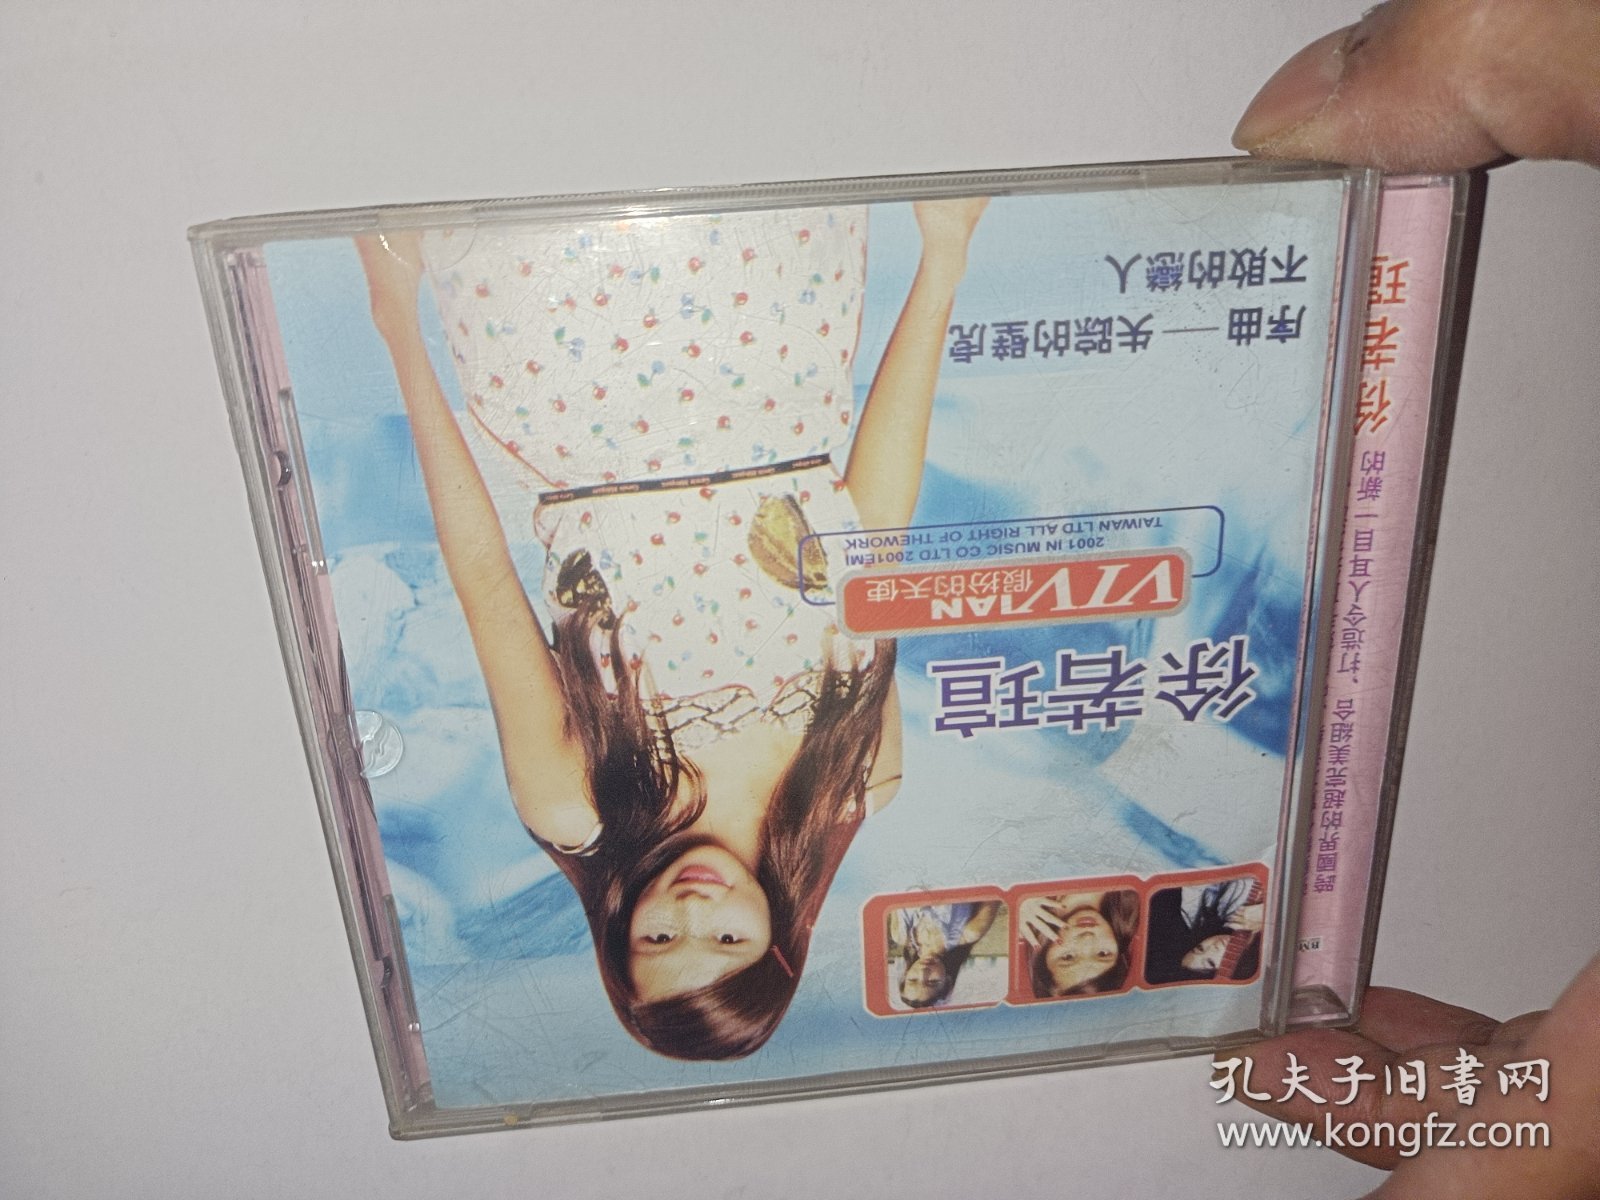 徐若瑄cd